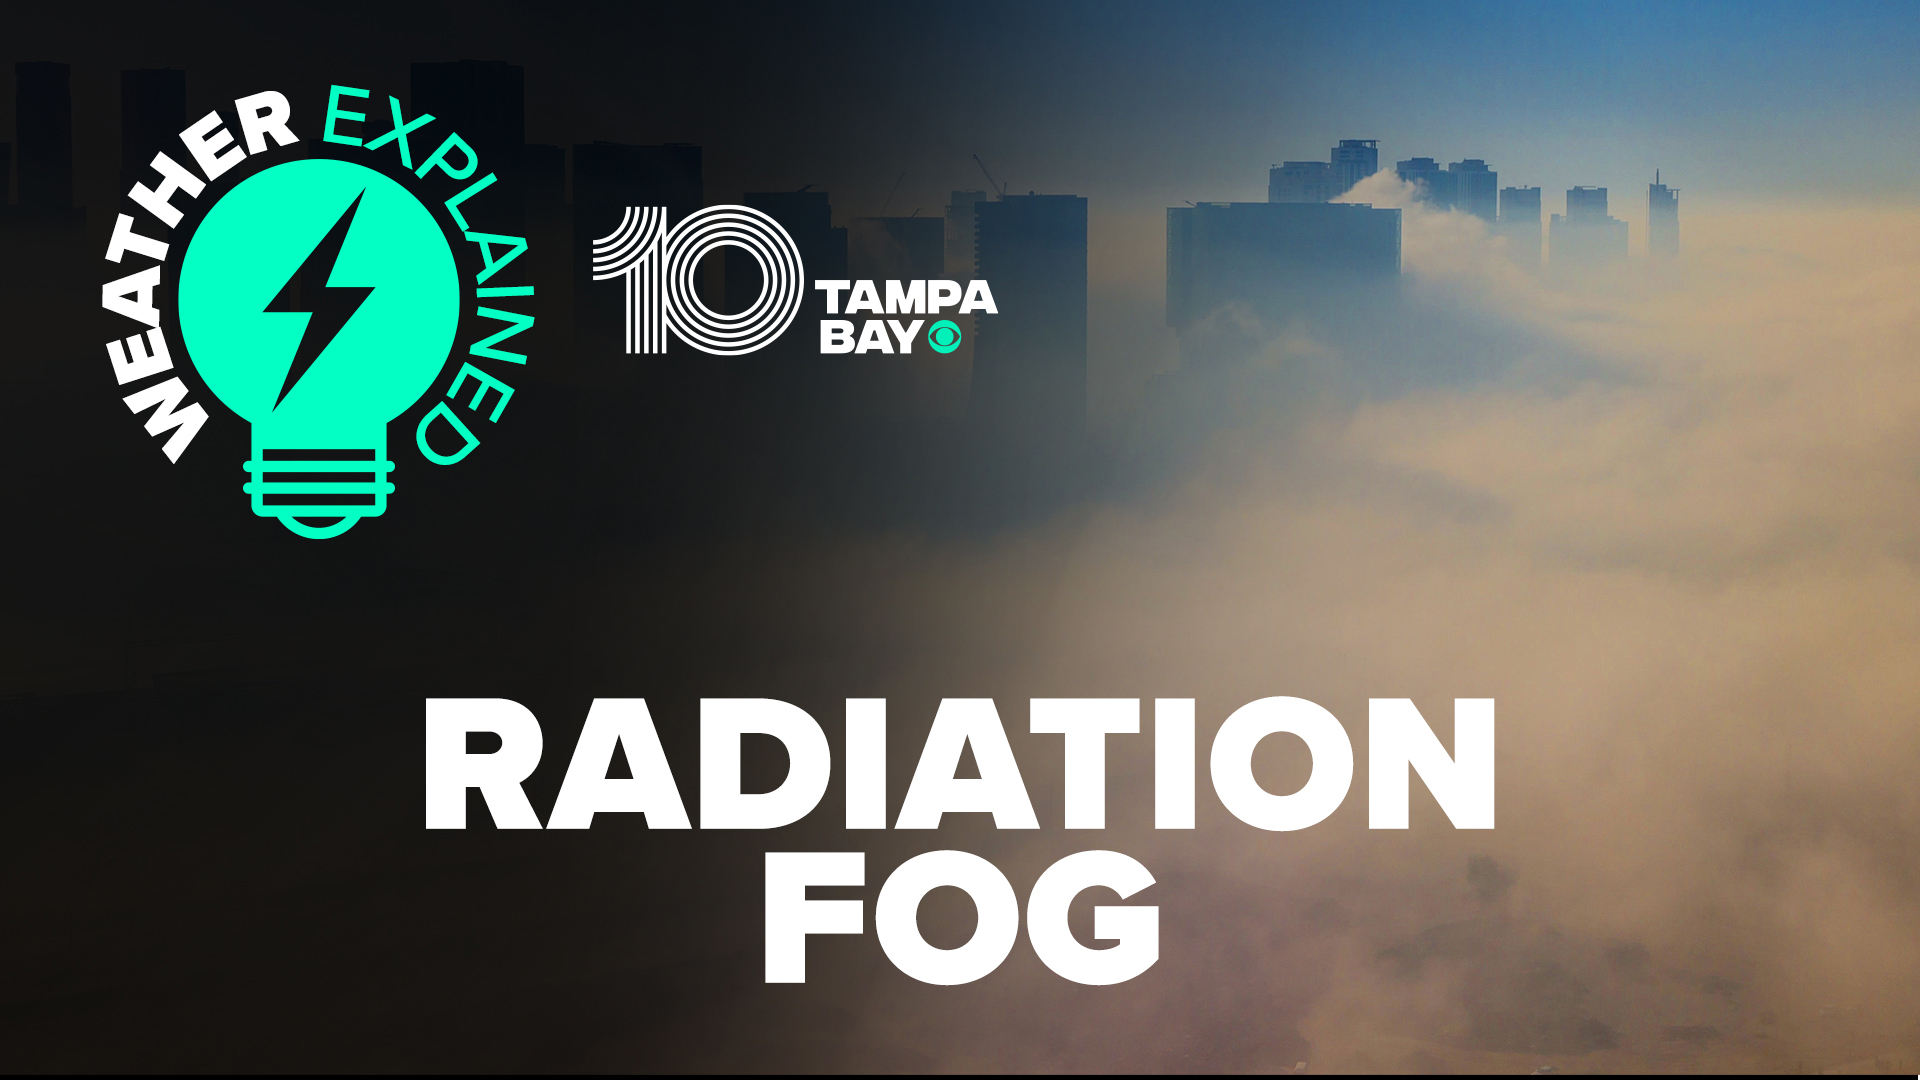 10 Tampa Bay meteorologist Natalie Ferrari explains how fog develops with "radiational cooling."